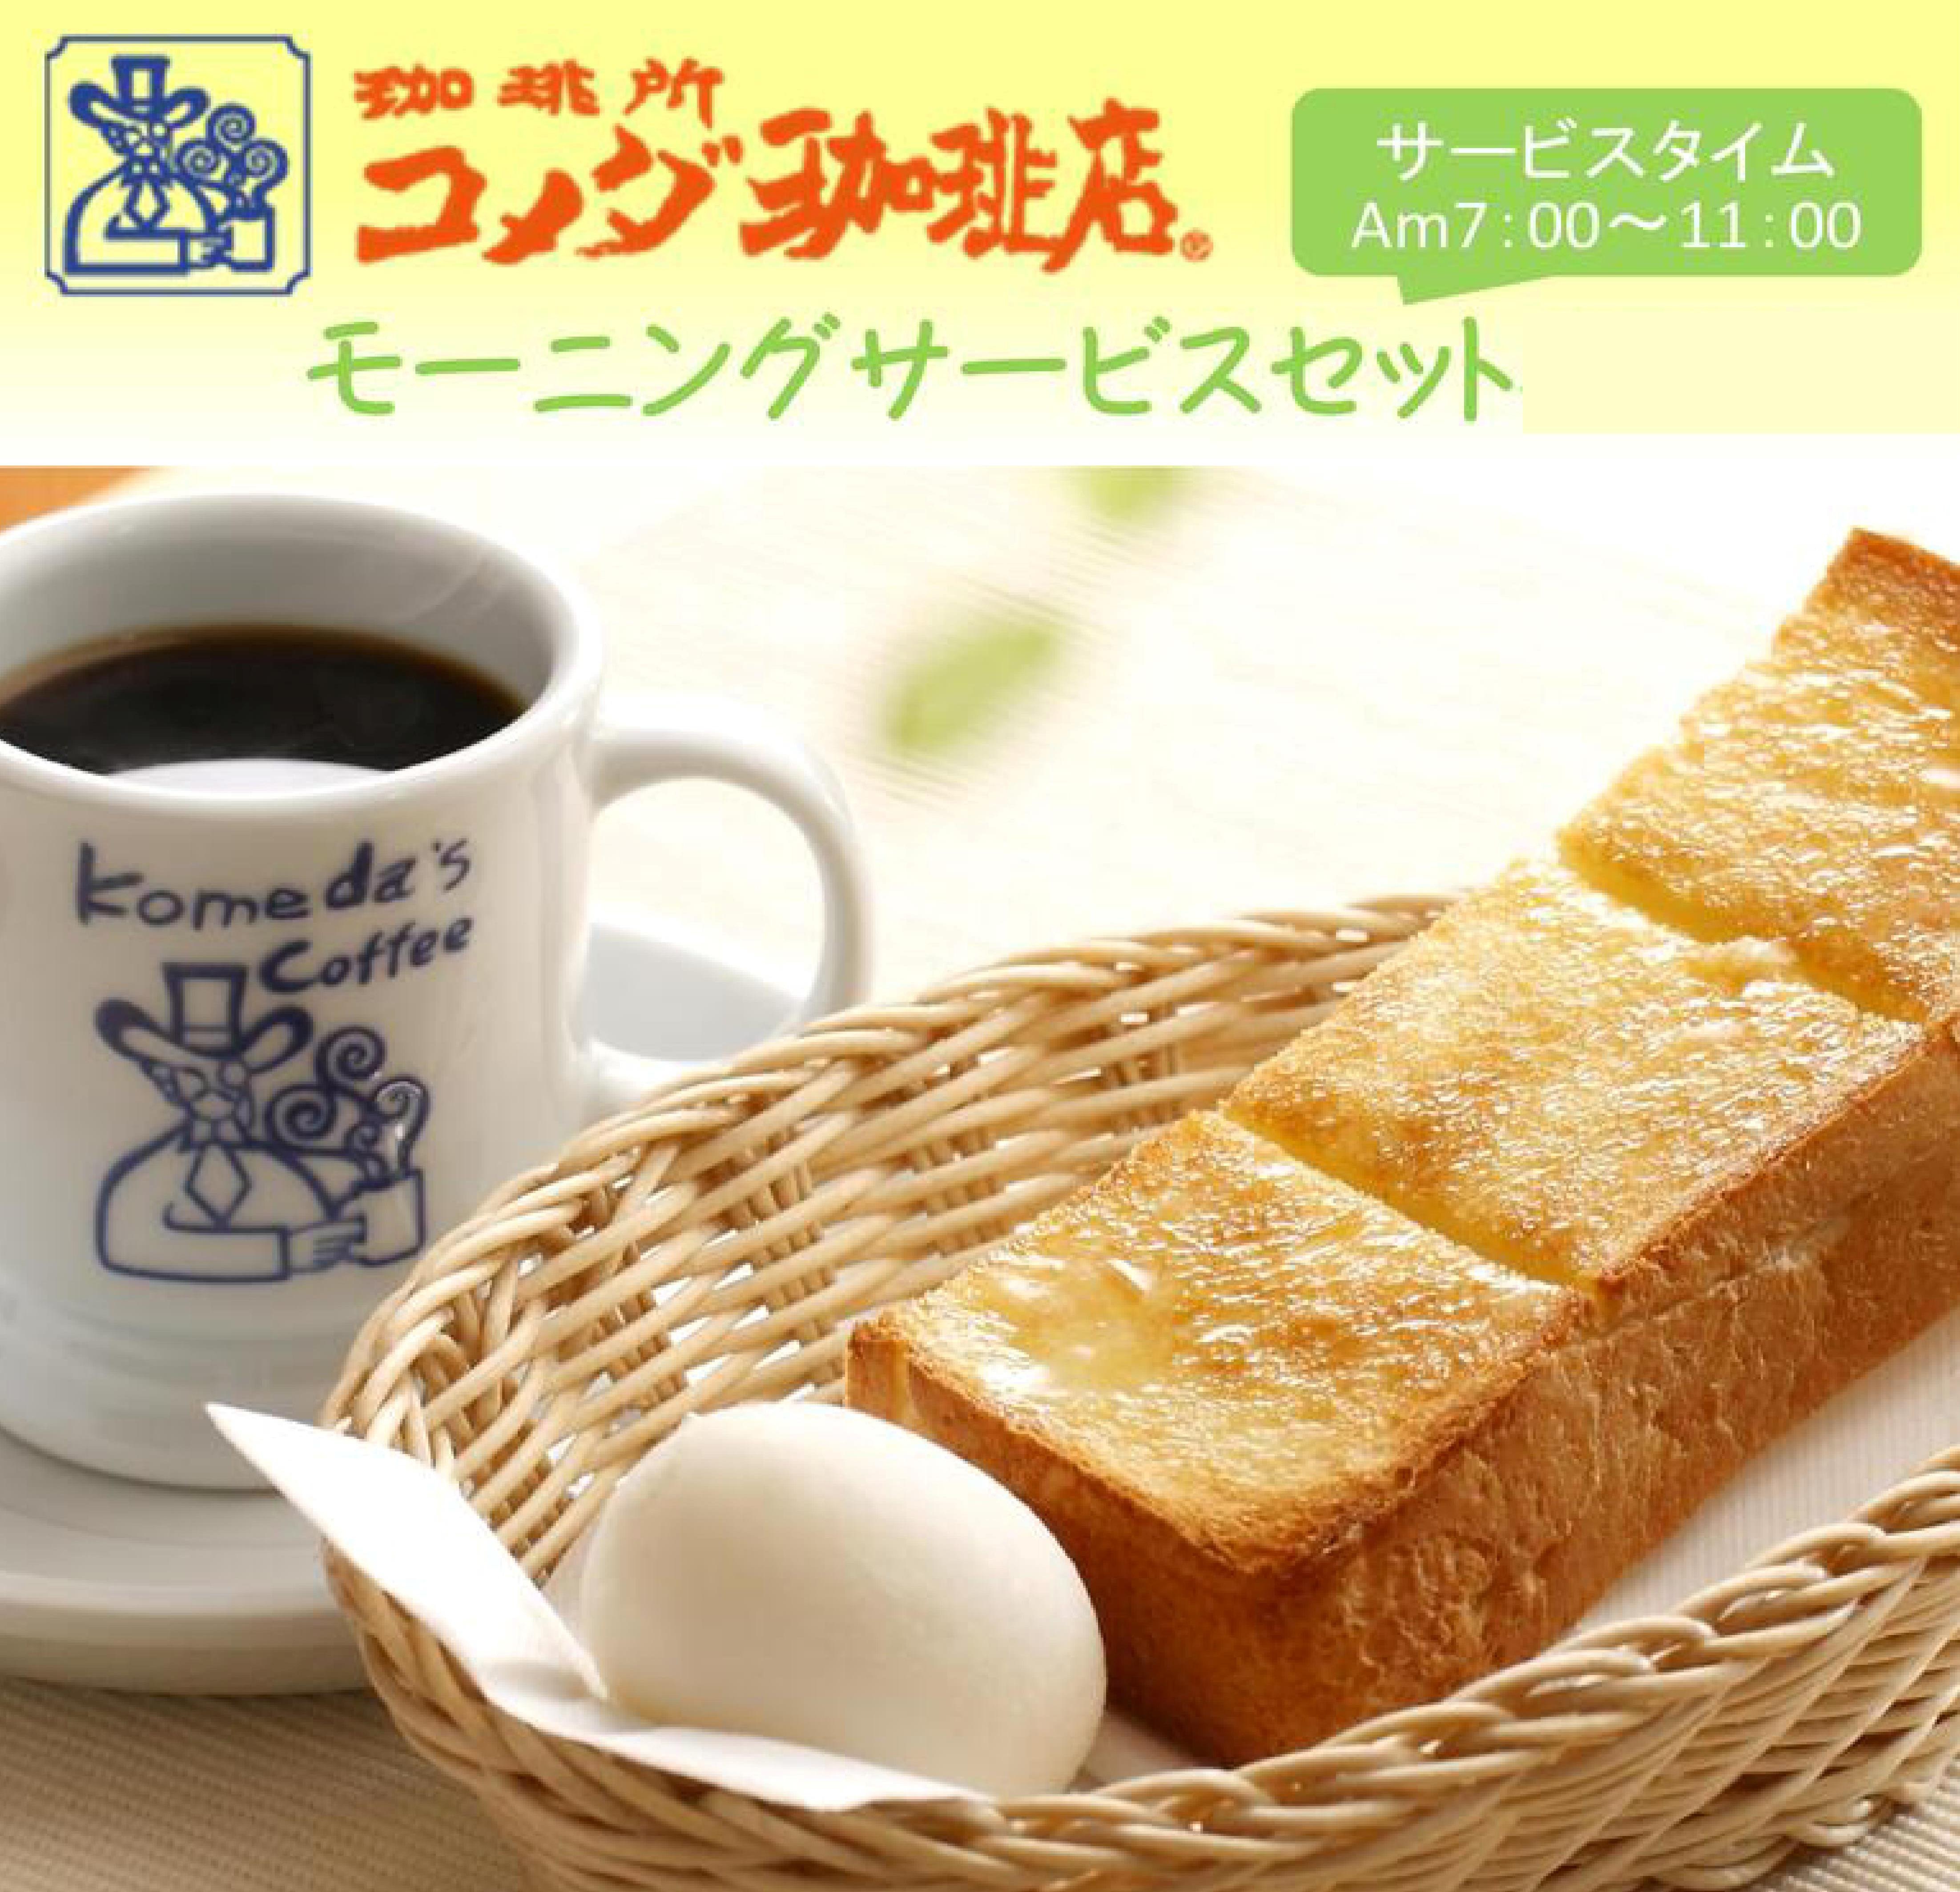 Komeda咖啡廳早間服務